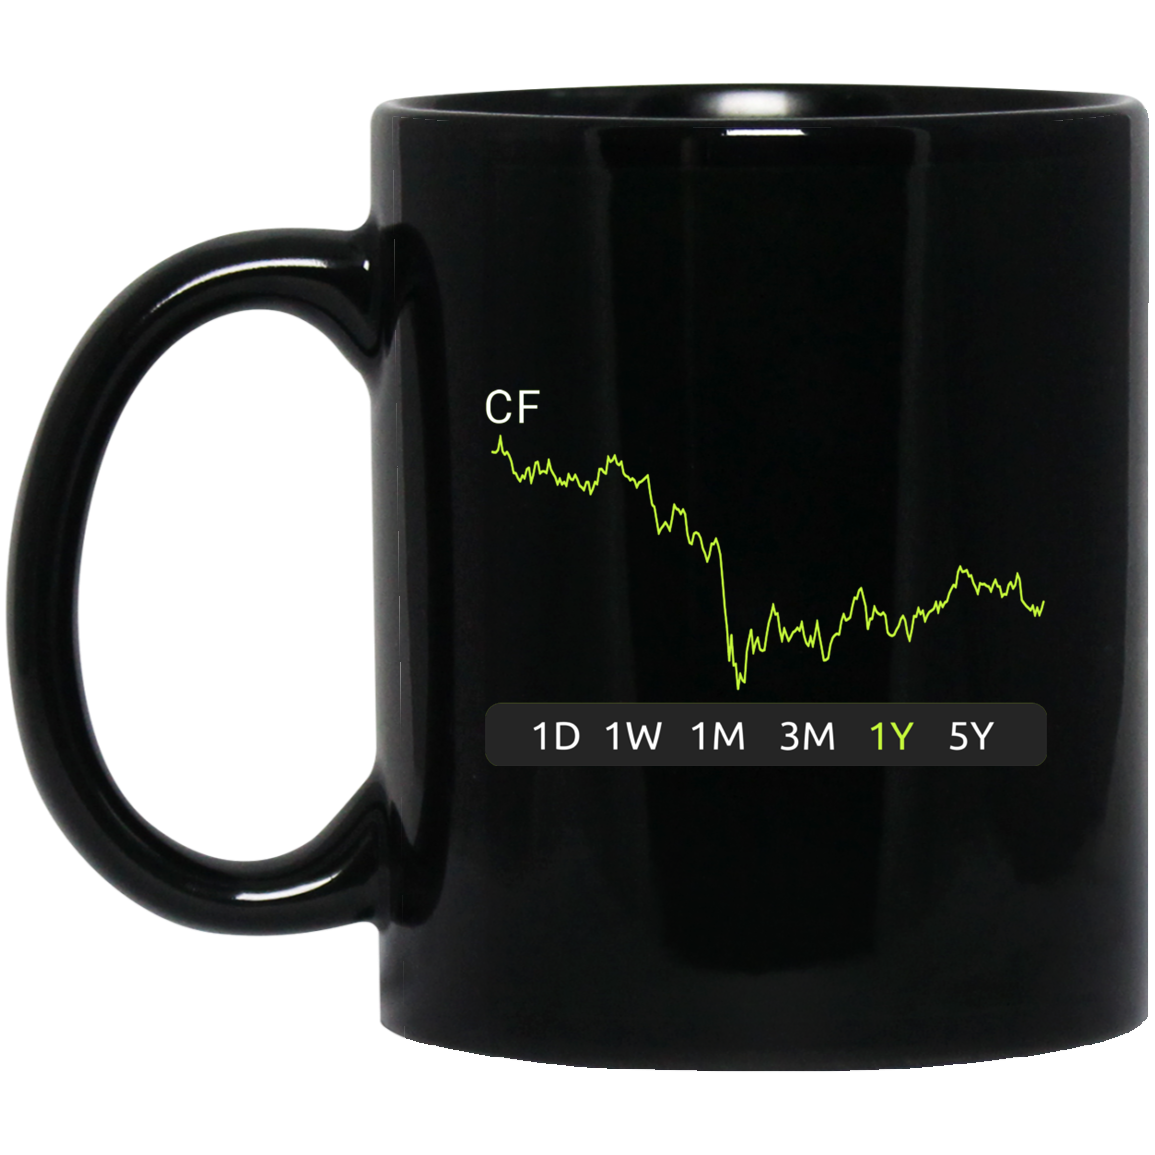 CF Stock 1y Mug